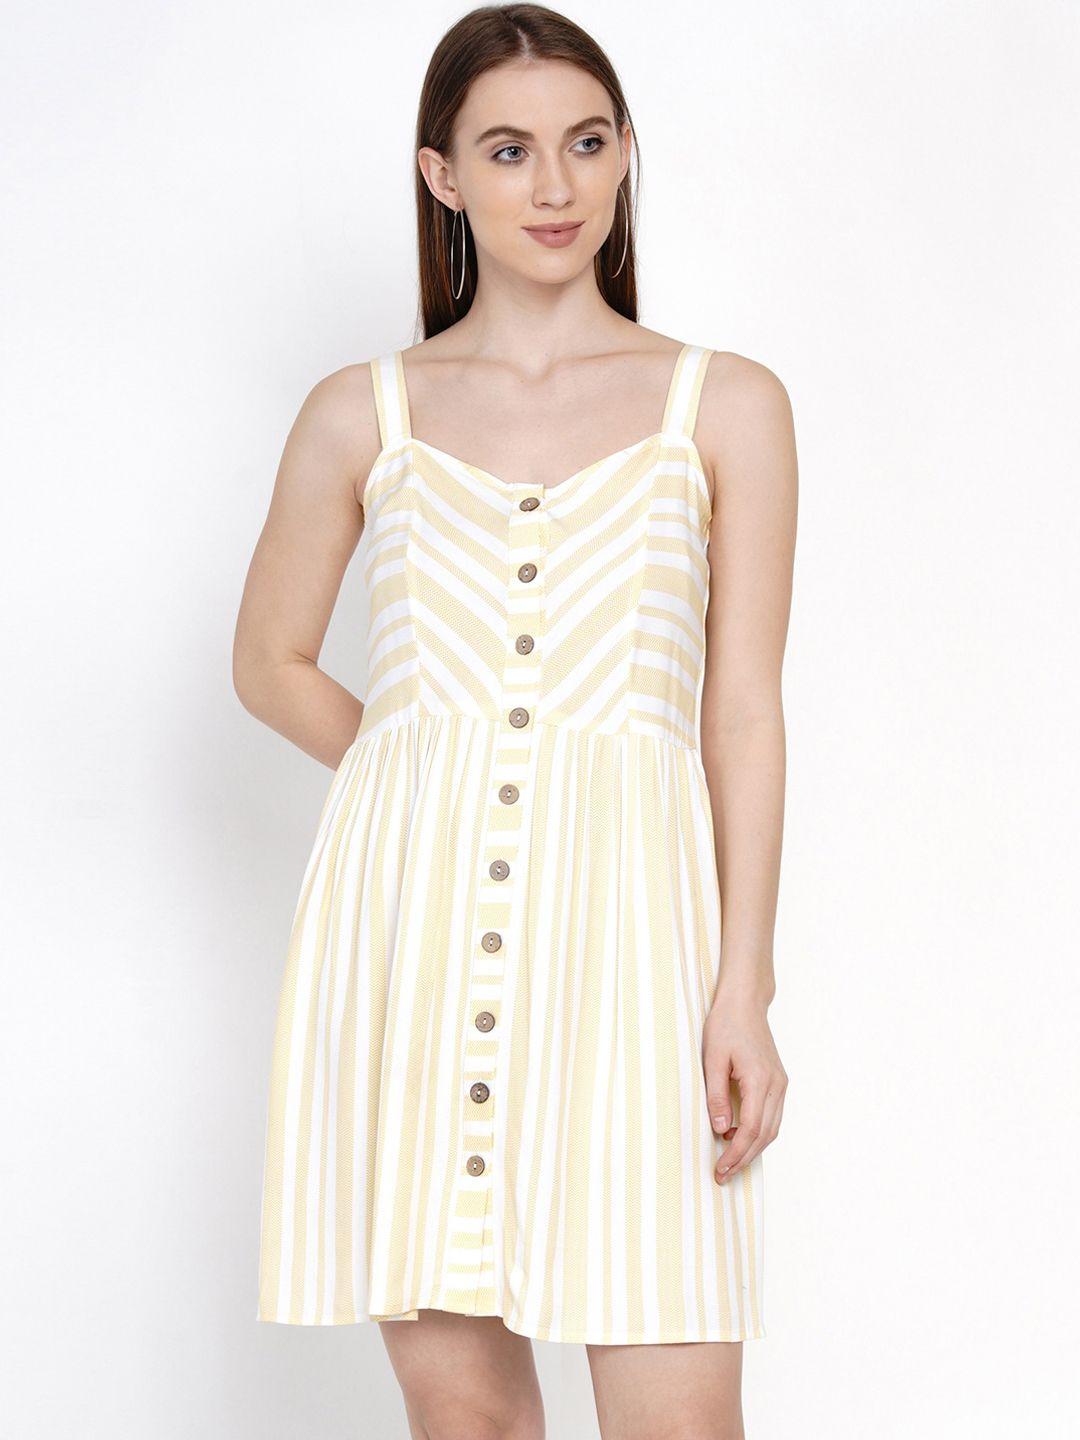 ix impression yellow striped dress